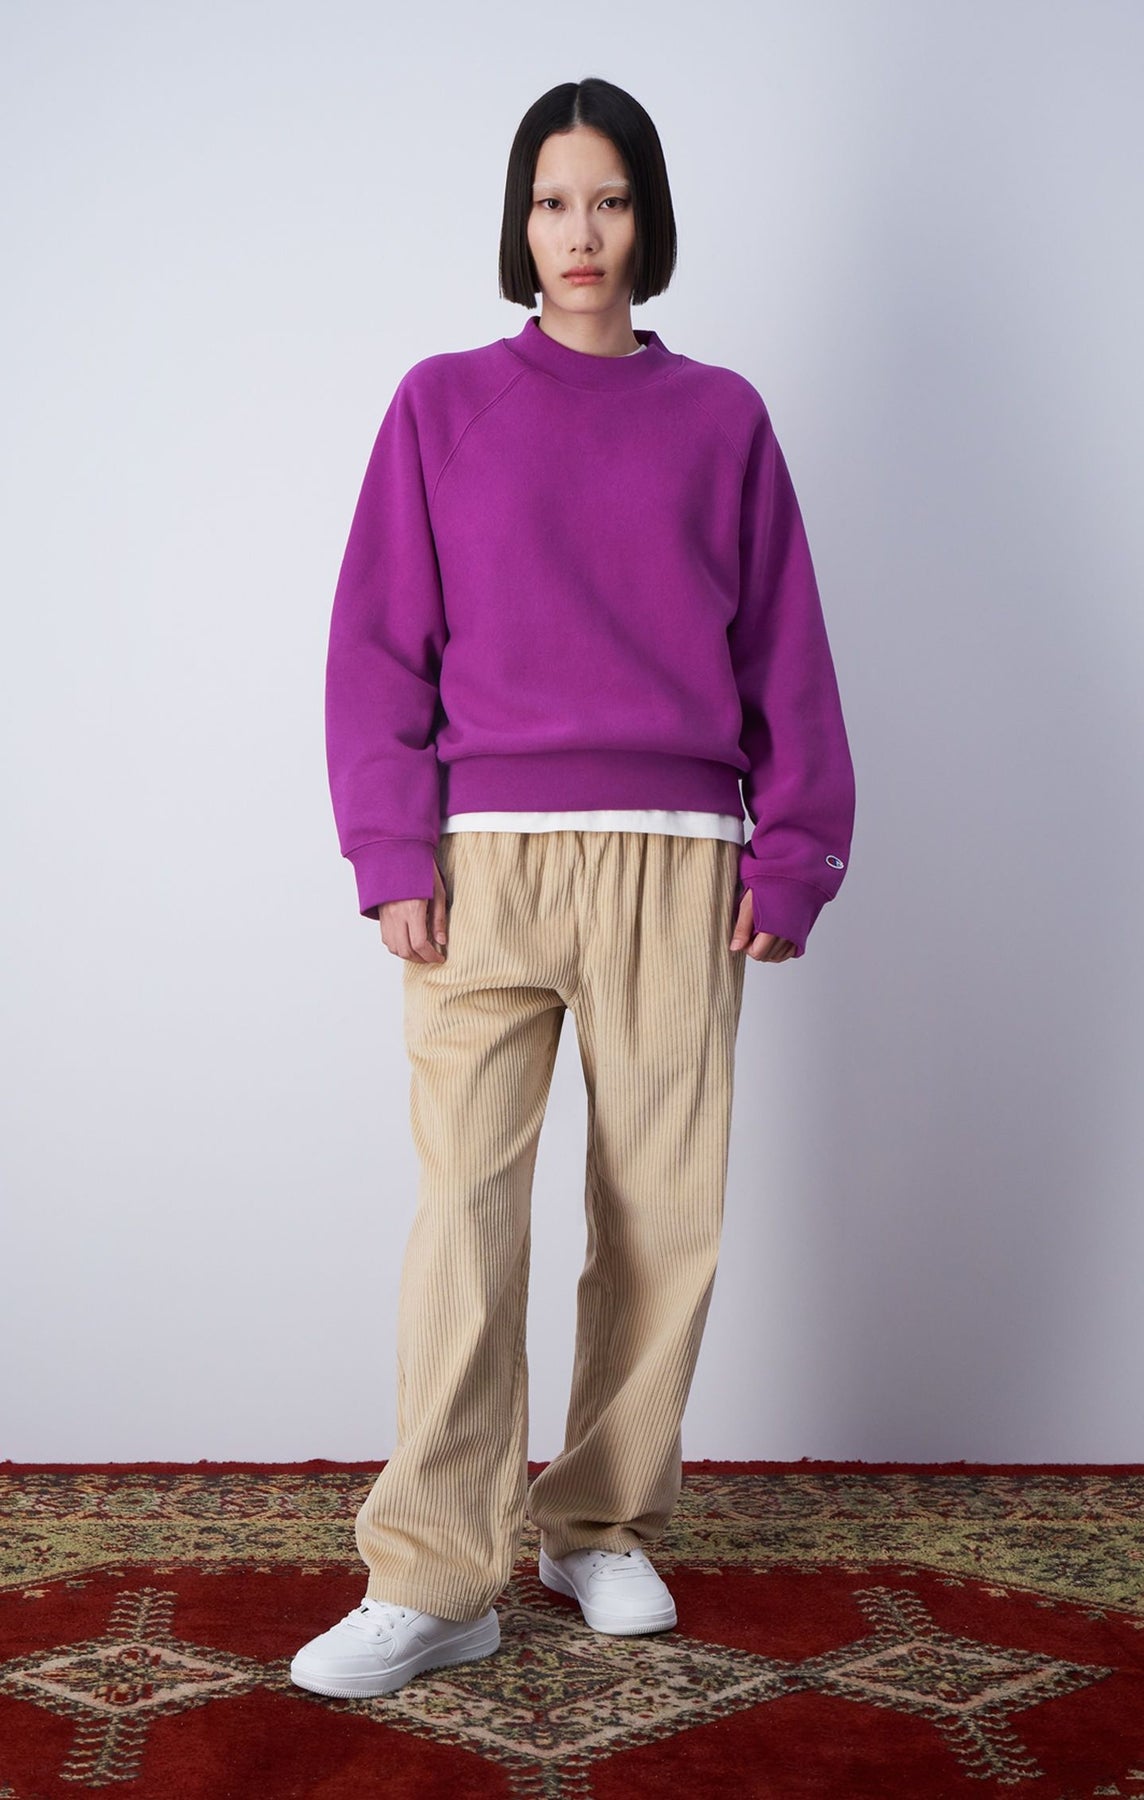 Crewneck Sweatshirt - Purple